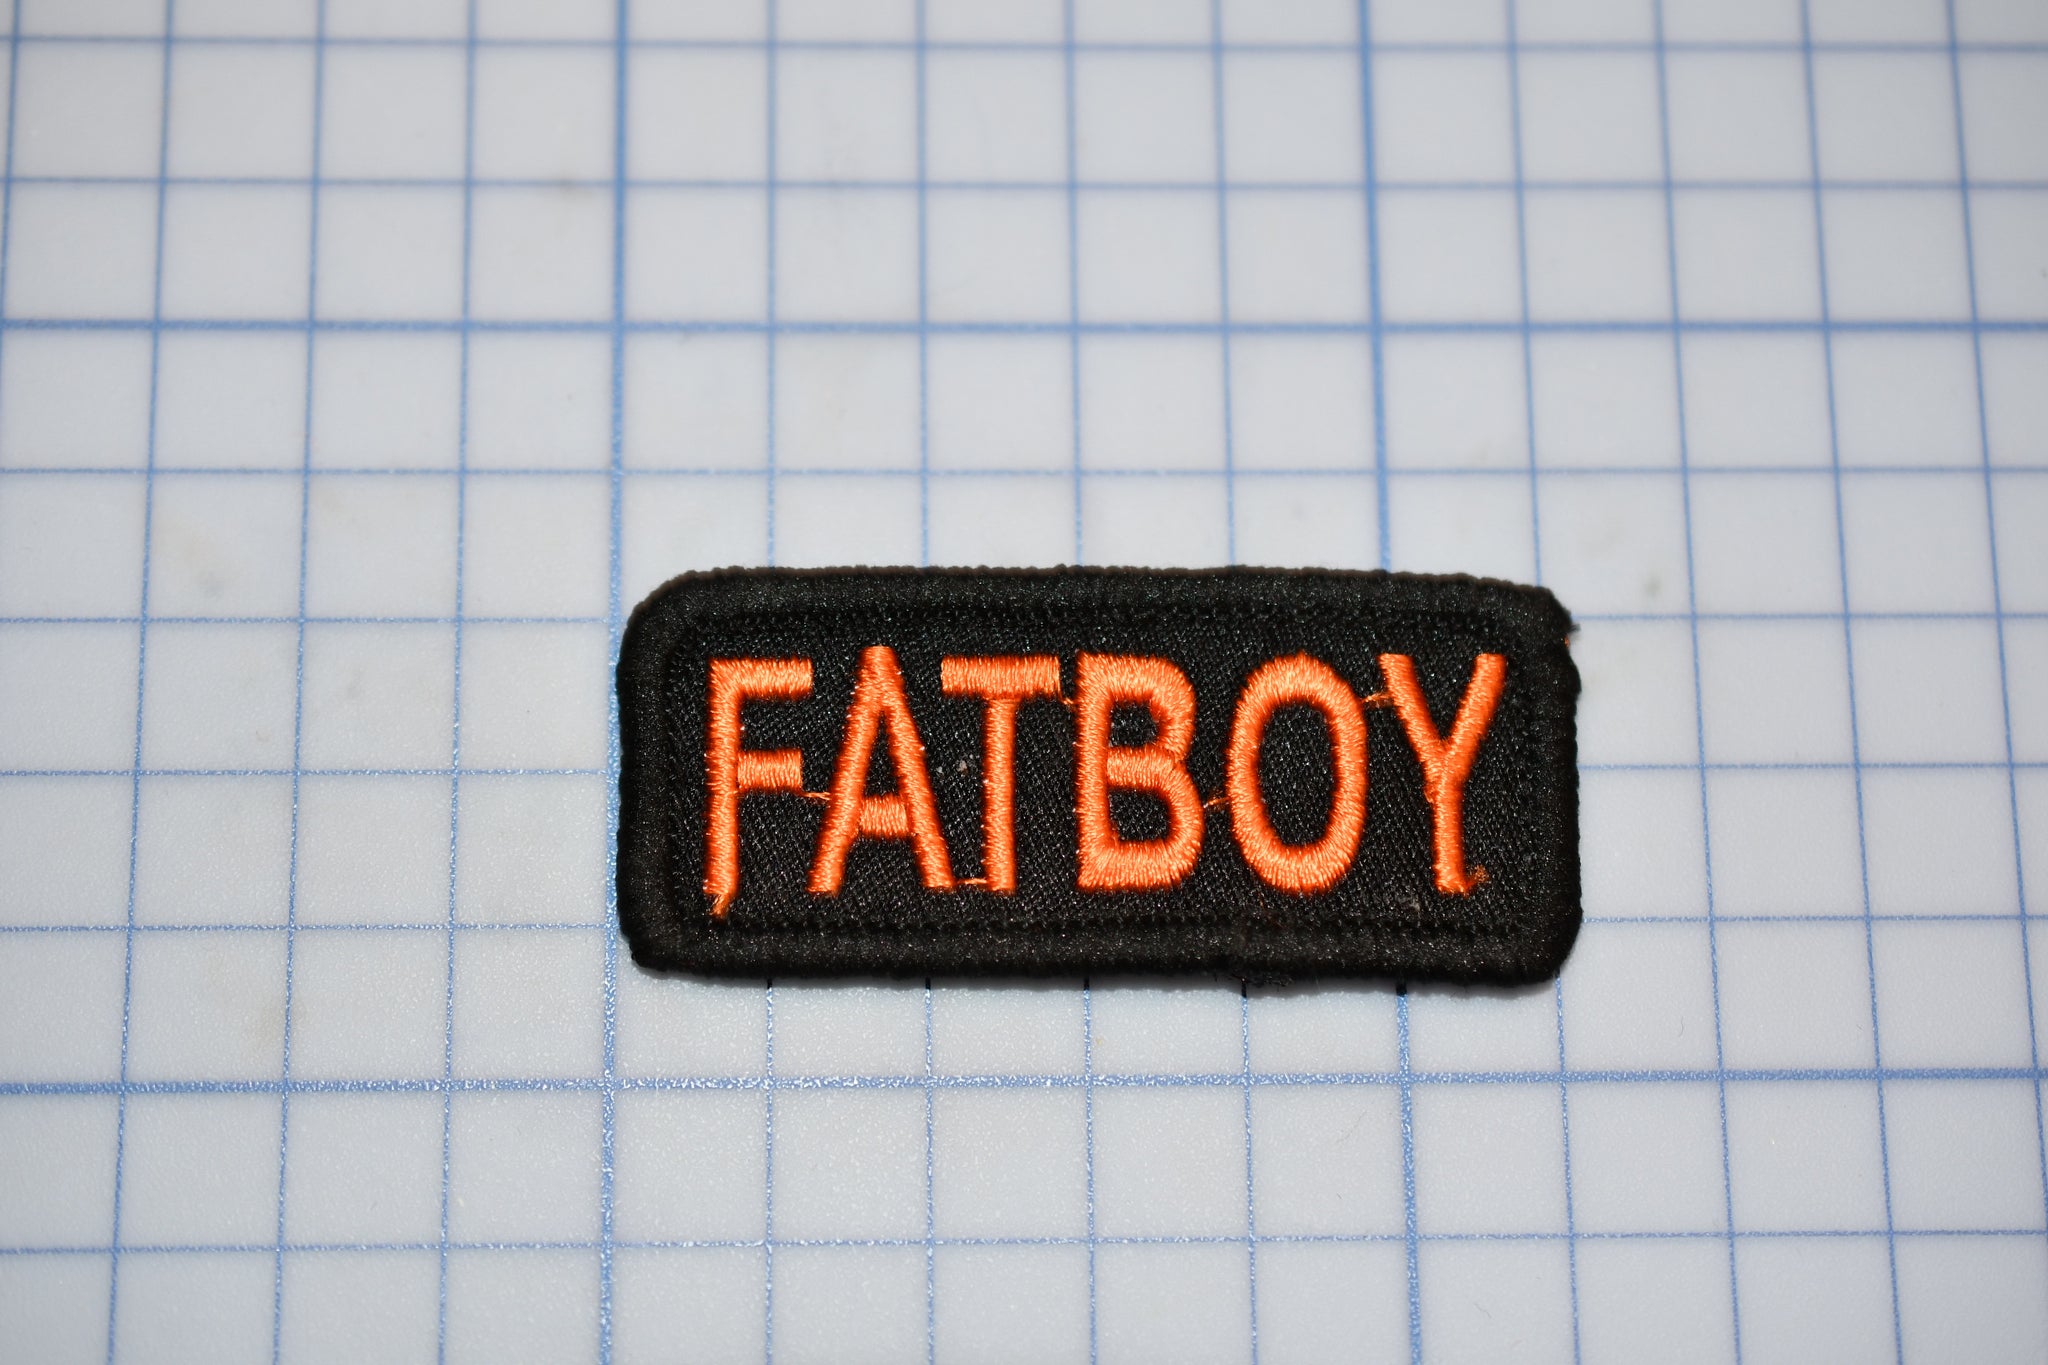 "Fatboy" Sew On Biker Patch (B30-366)